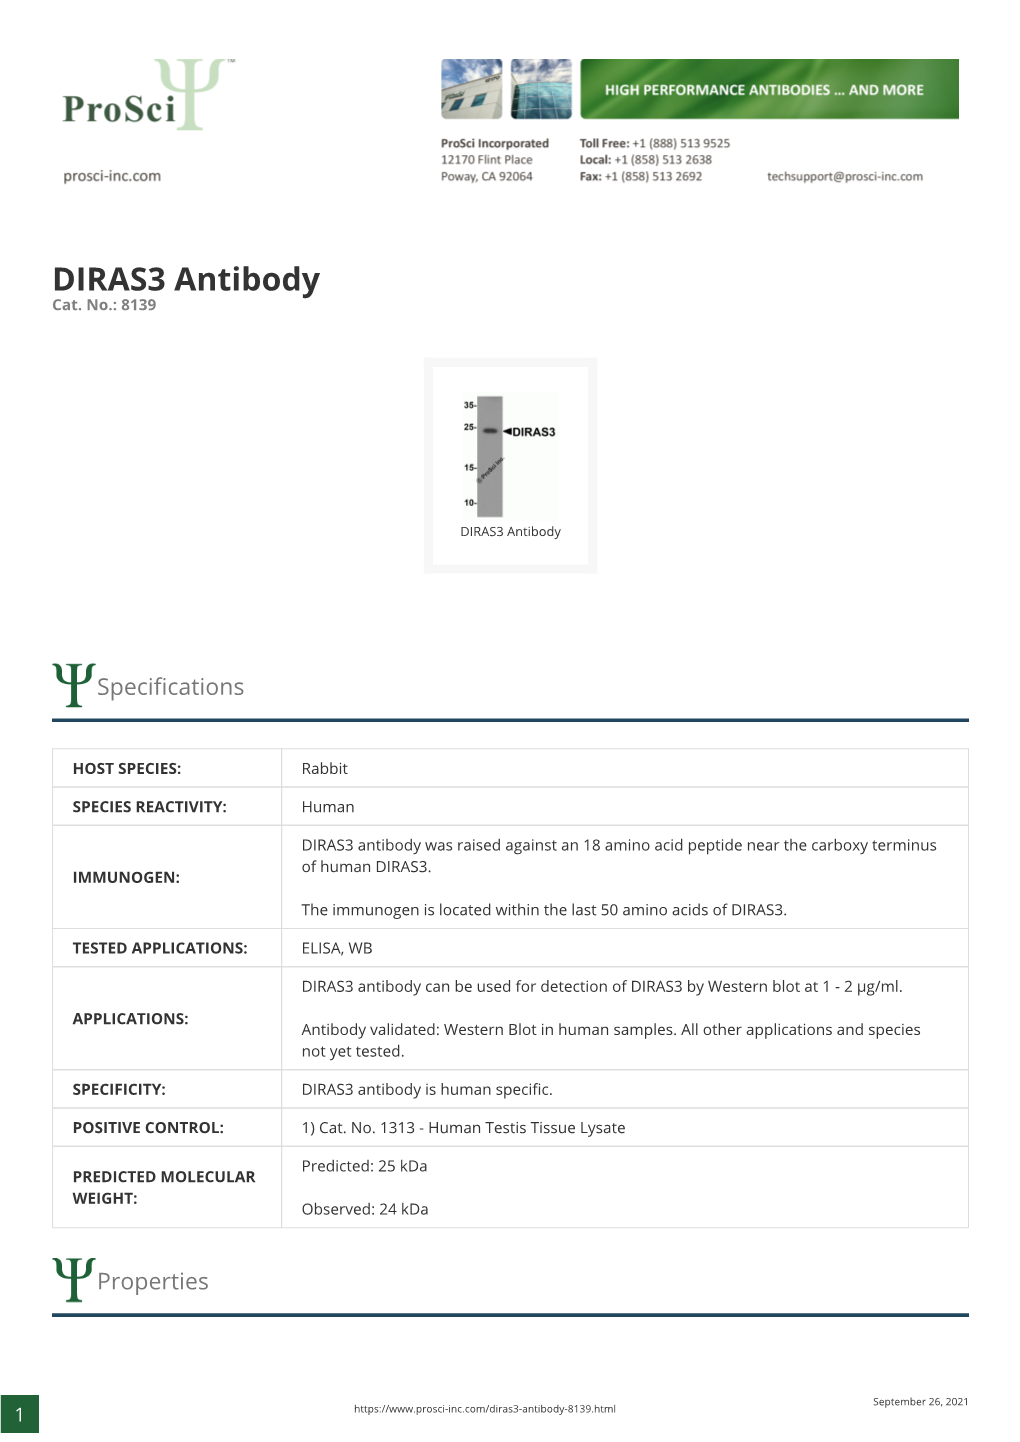 DIRAS3 Antibody Cat